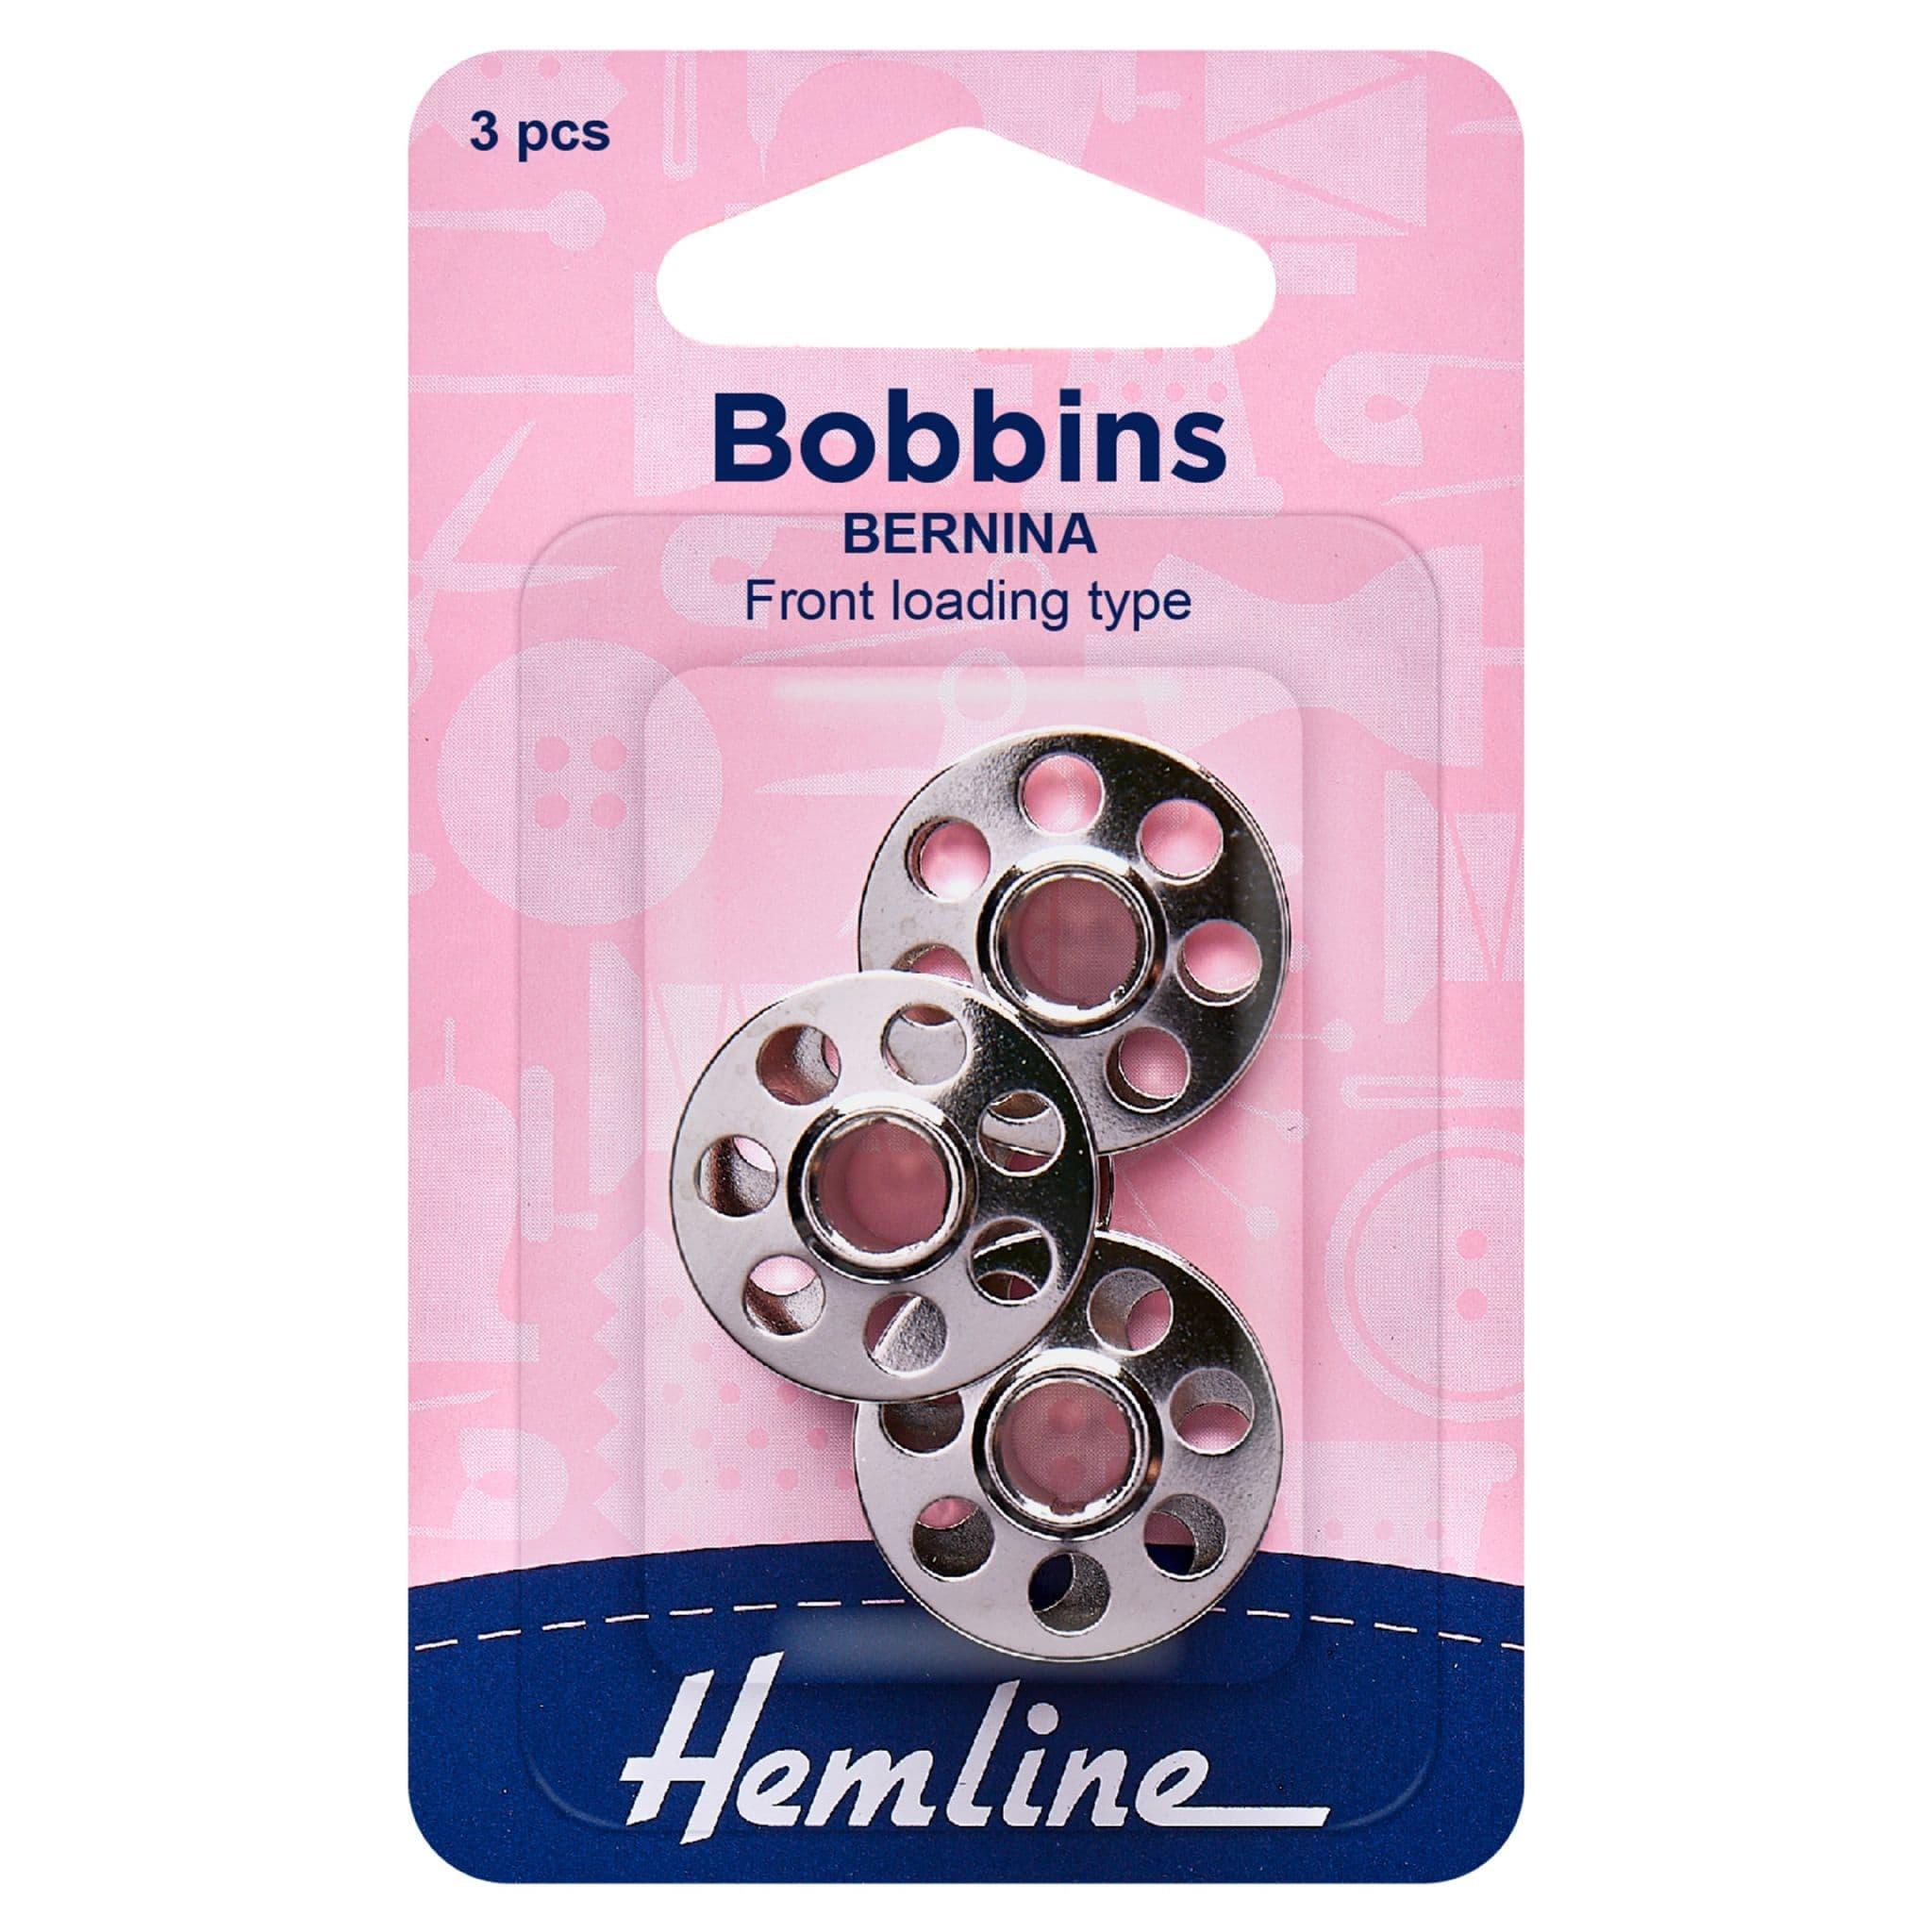 Hemline Bobbins - Bernina - Front Loading 7 hole - 3 pcs